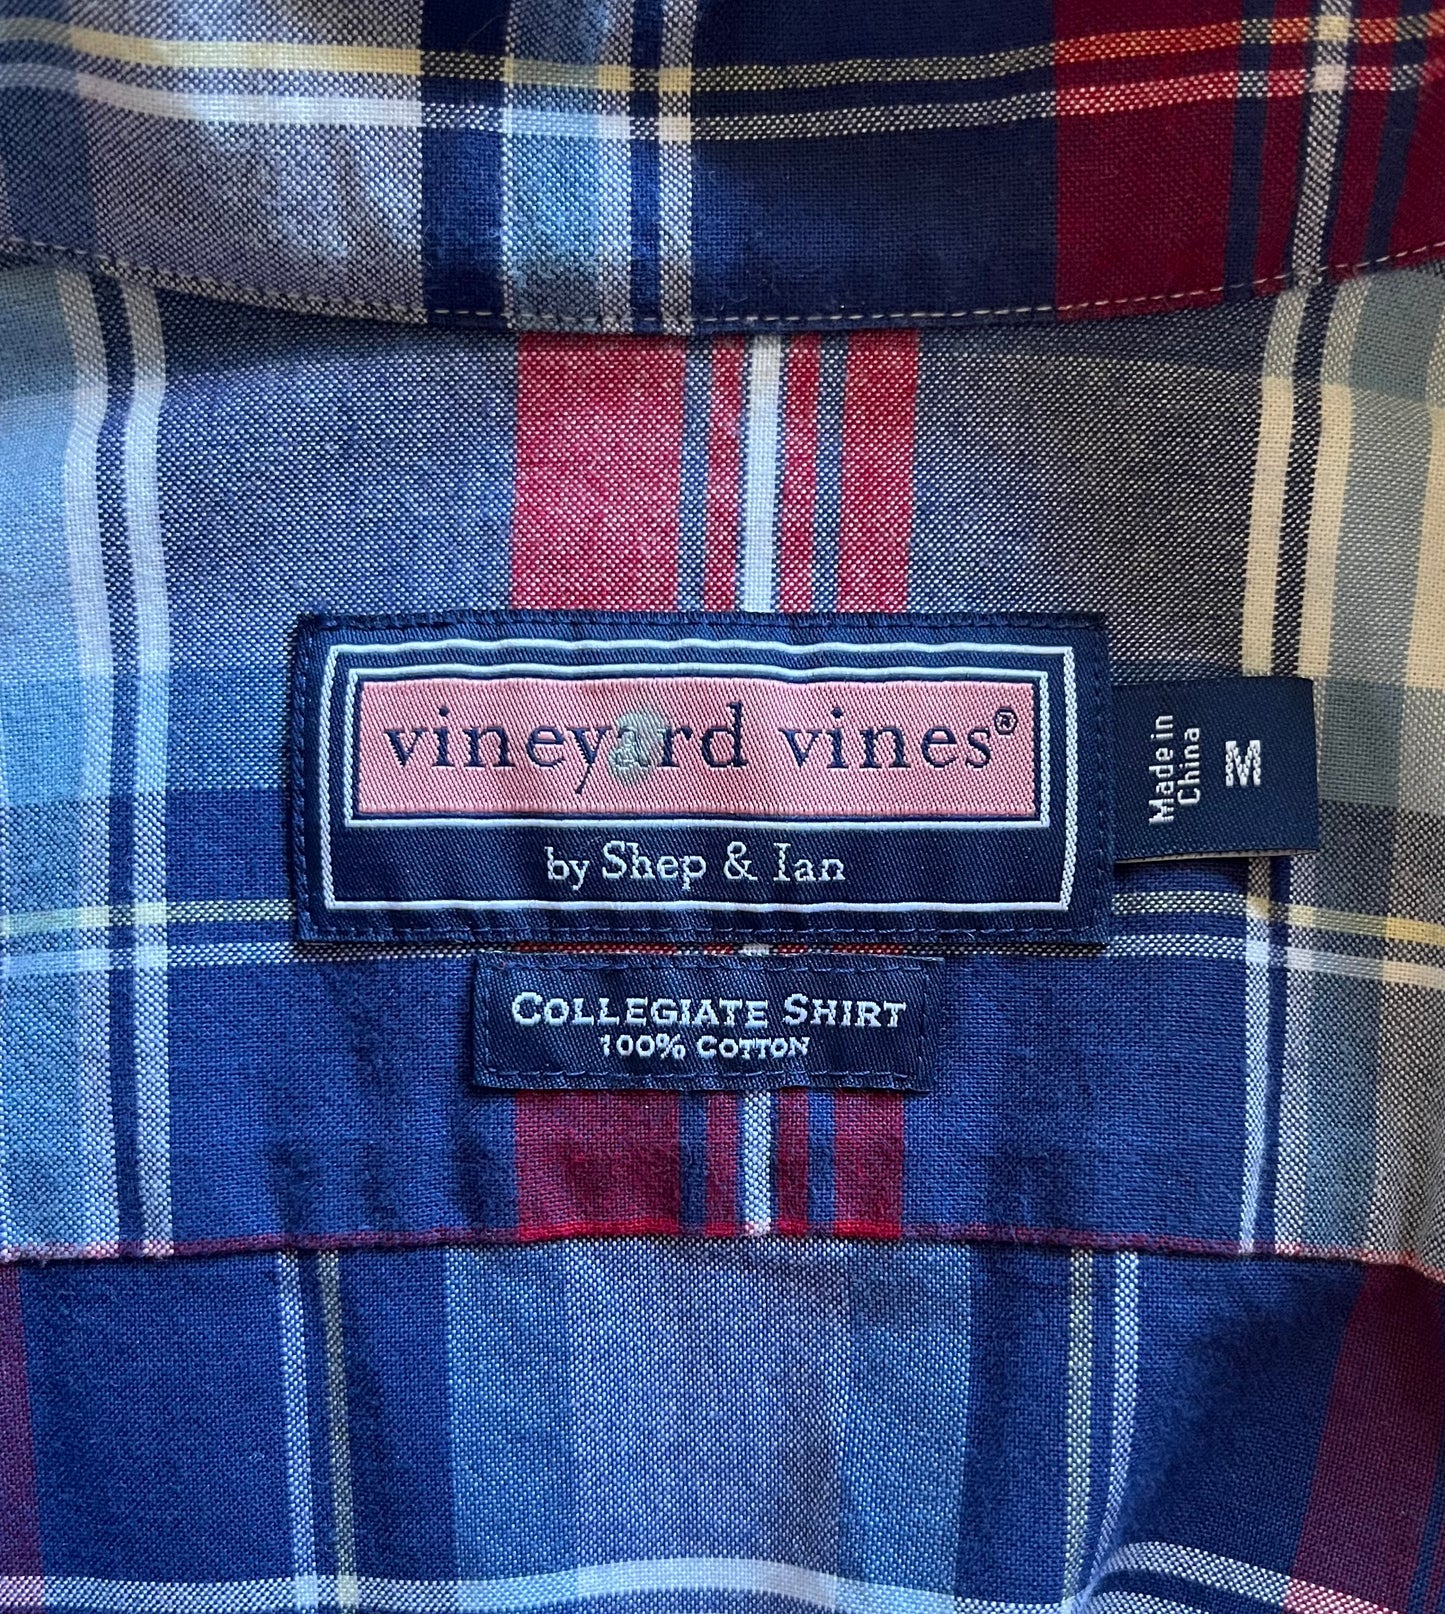 Vineyard Vines - Long Sleeve Dress Shirt (Medium)